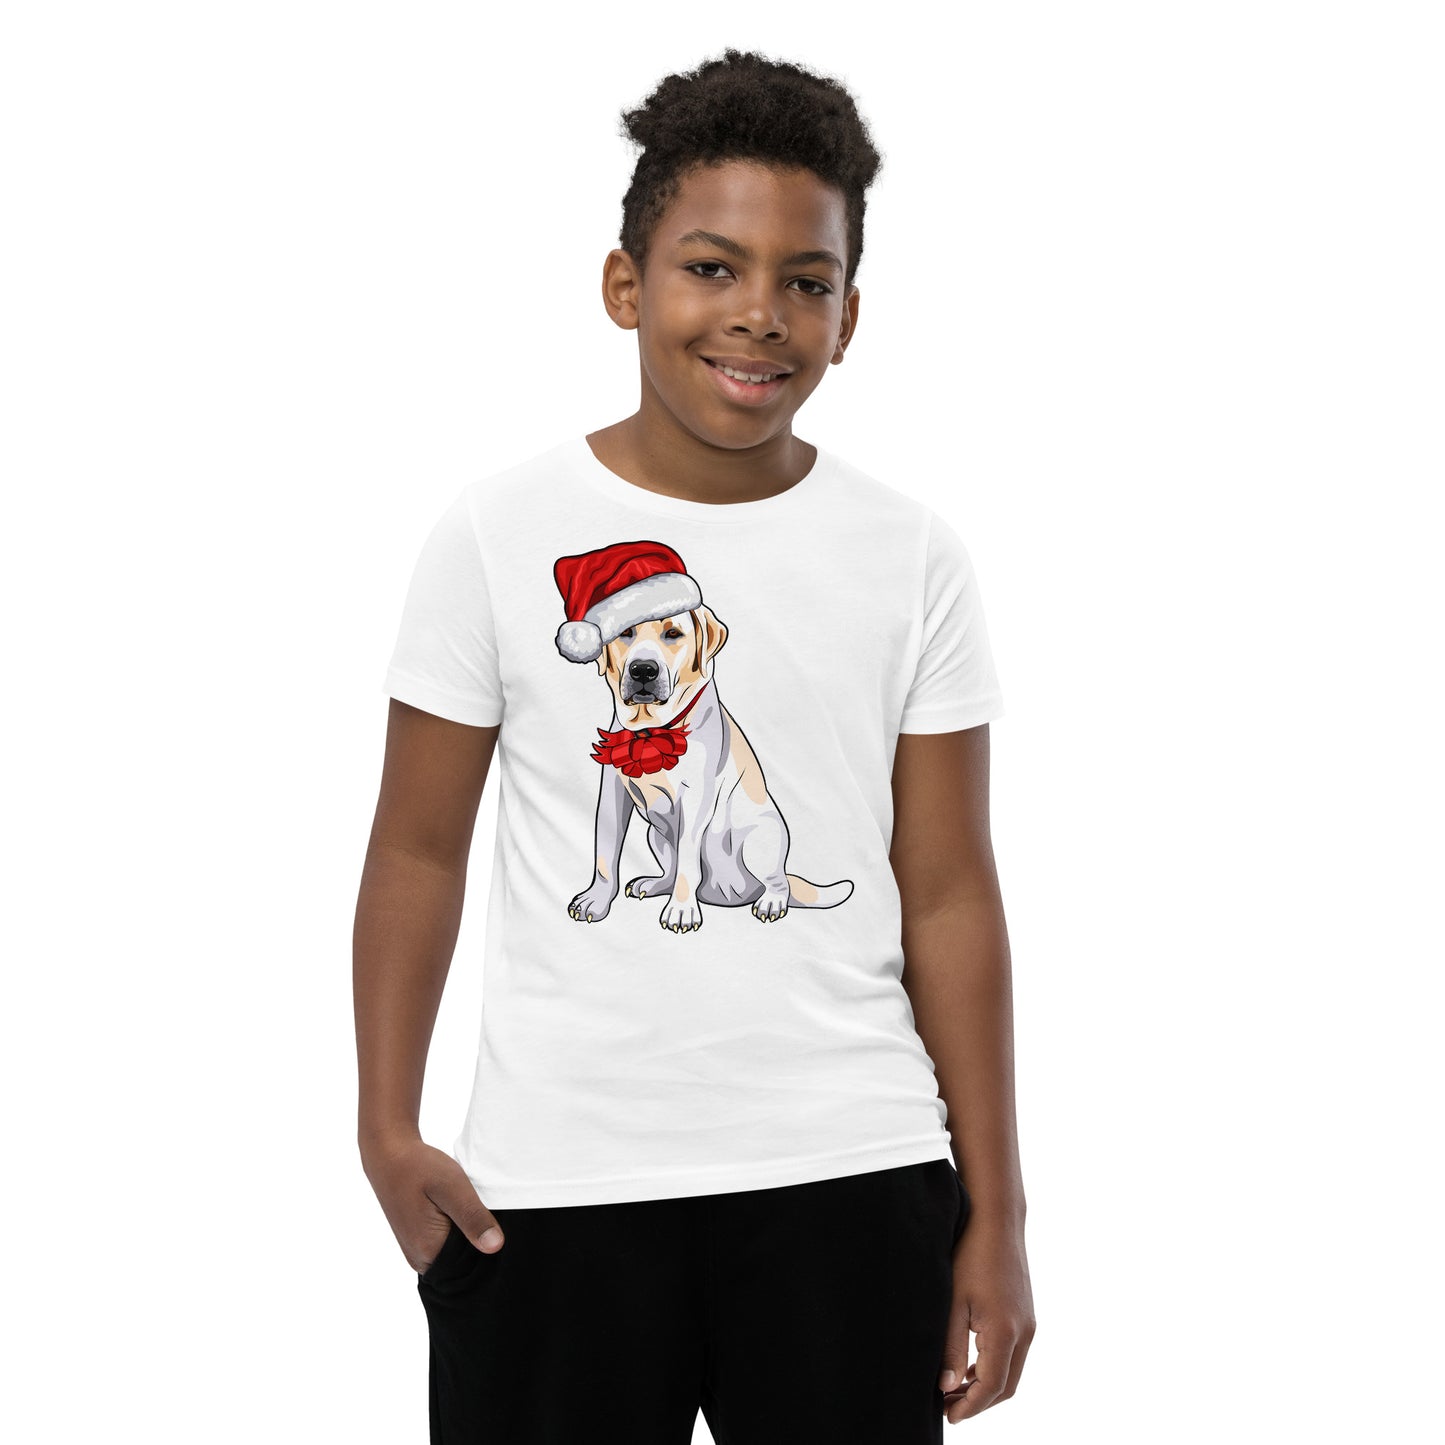 Cool Dog Wearing Santa Claus Hat T-shirt, No. 0062